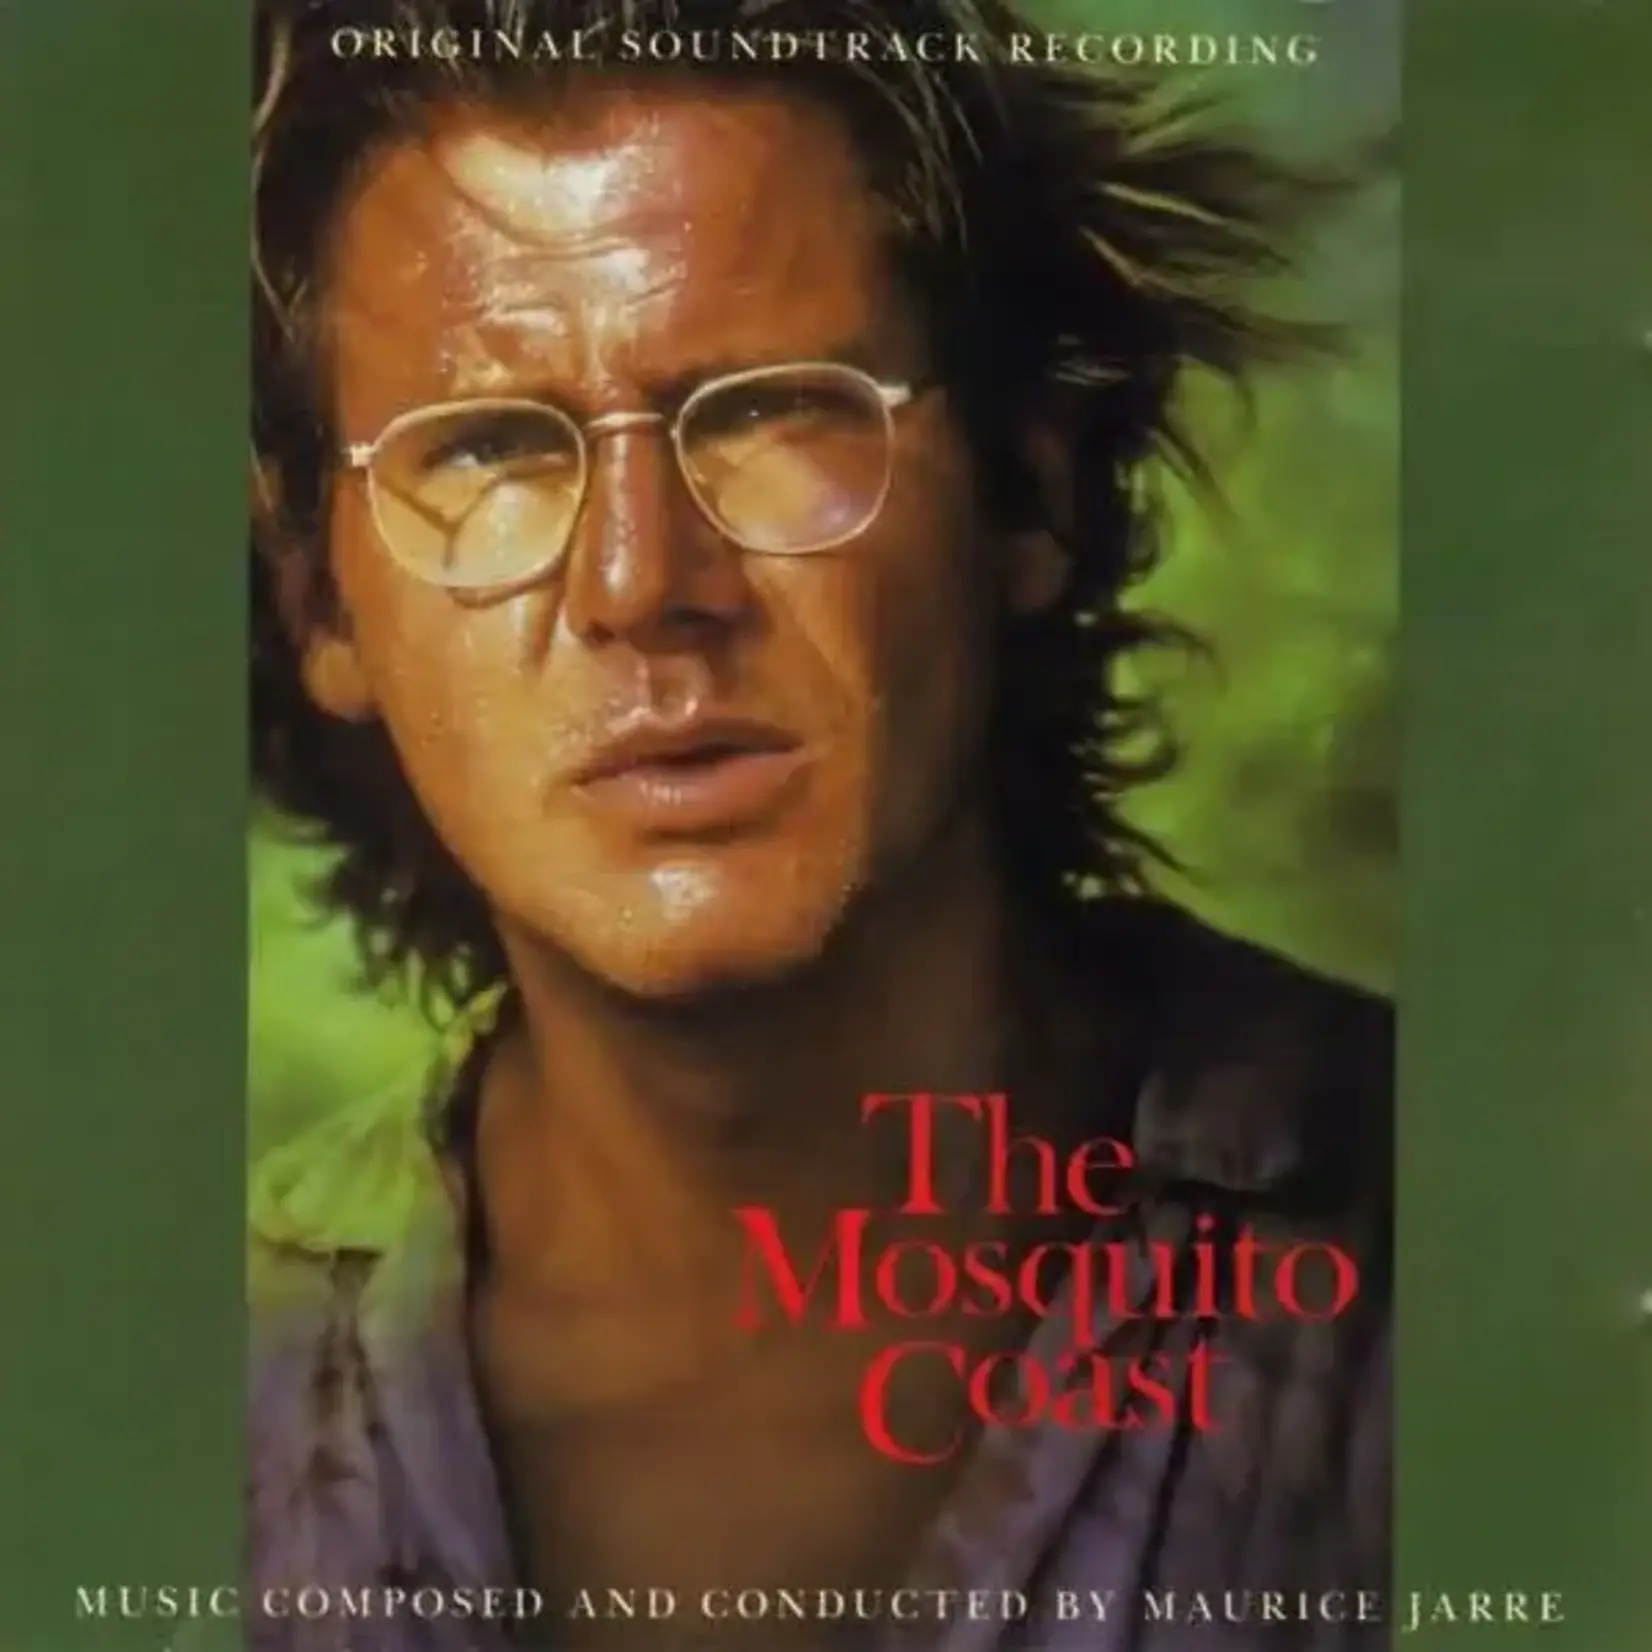 [Vintage] Maurice Jarre - Mosquito Coast (soundtrack)